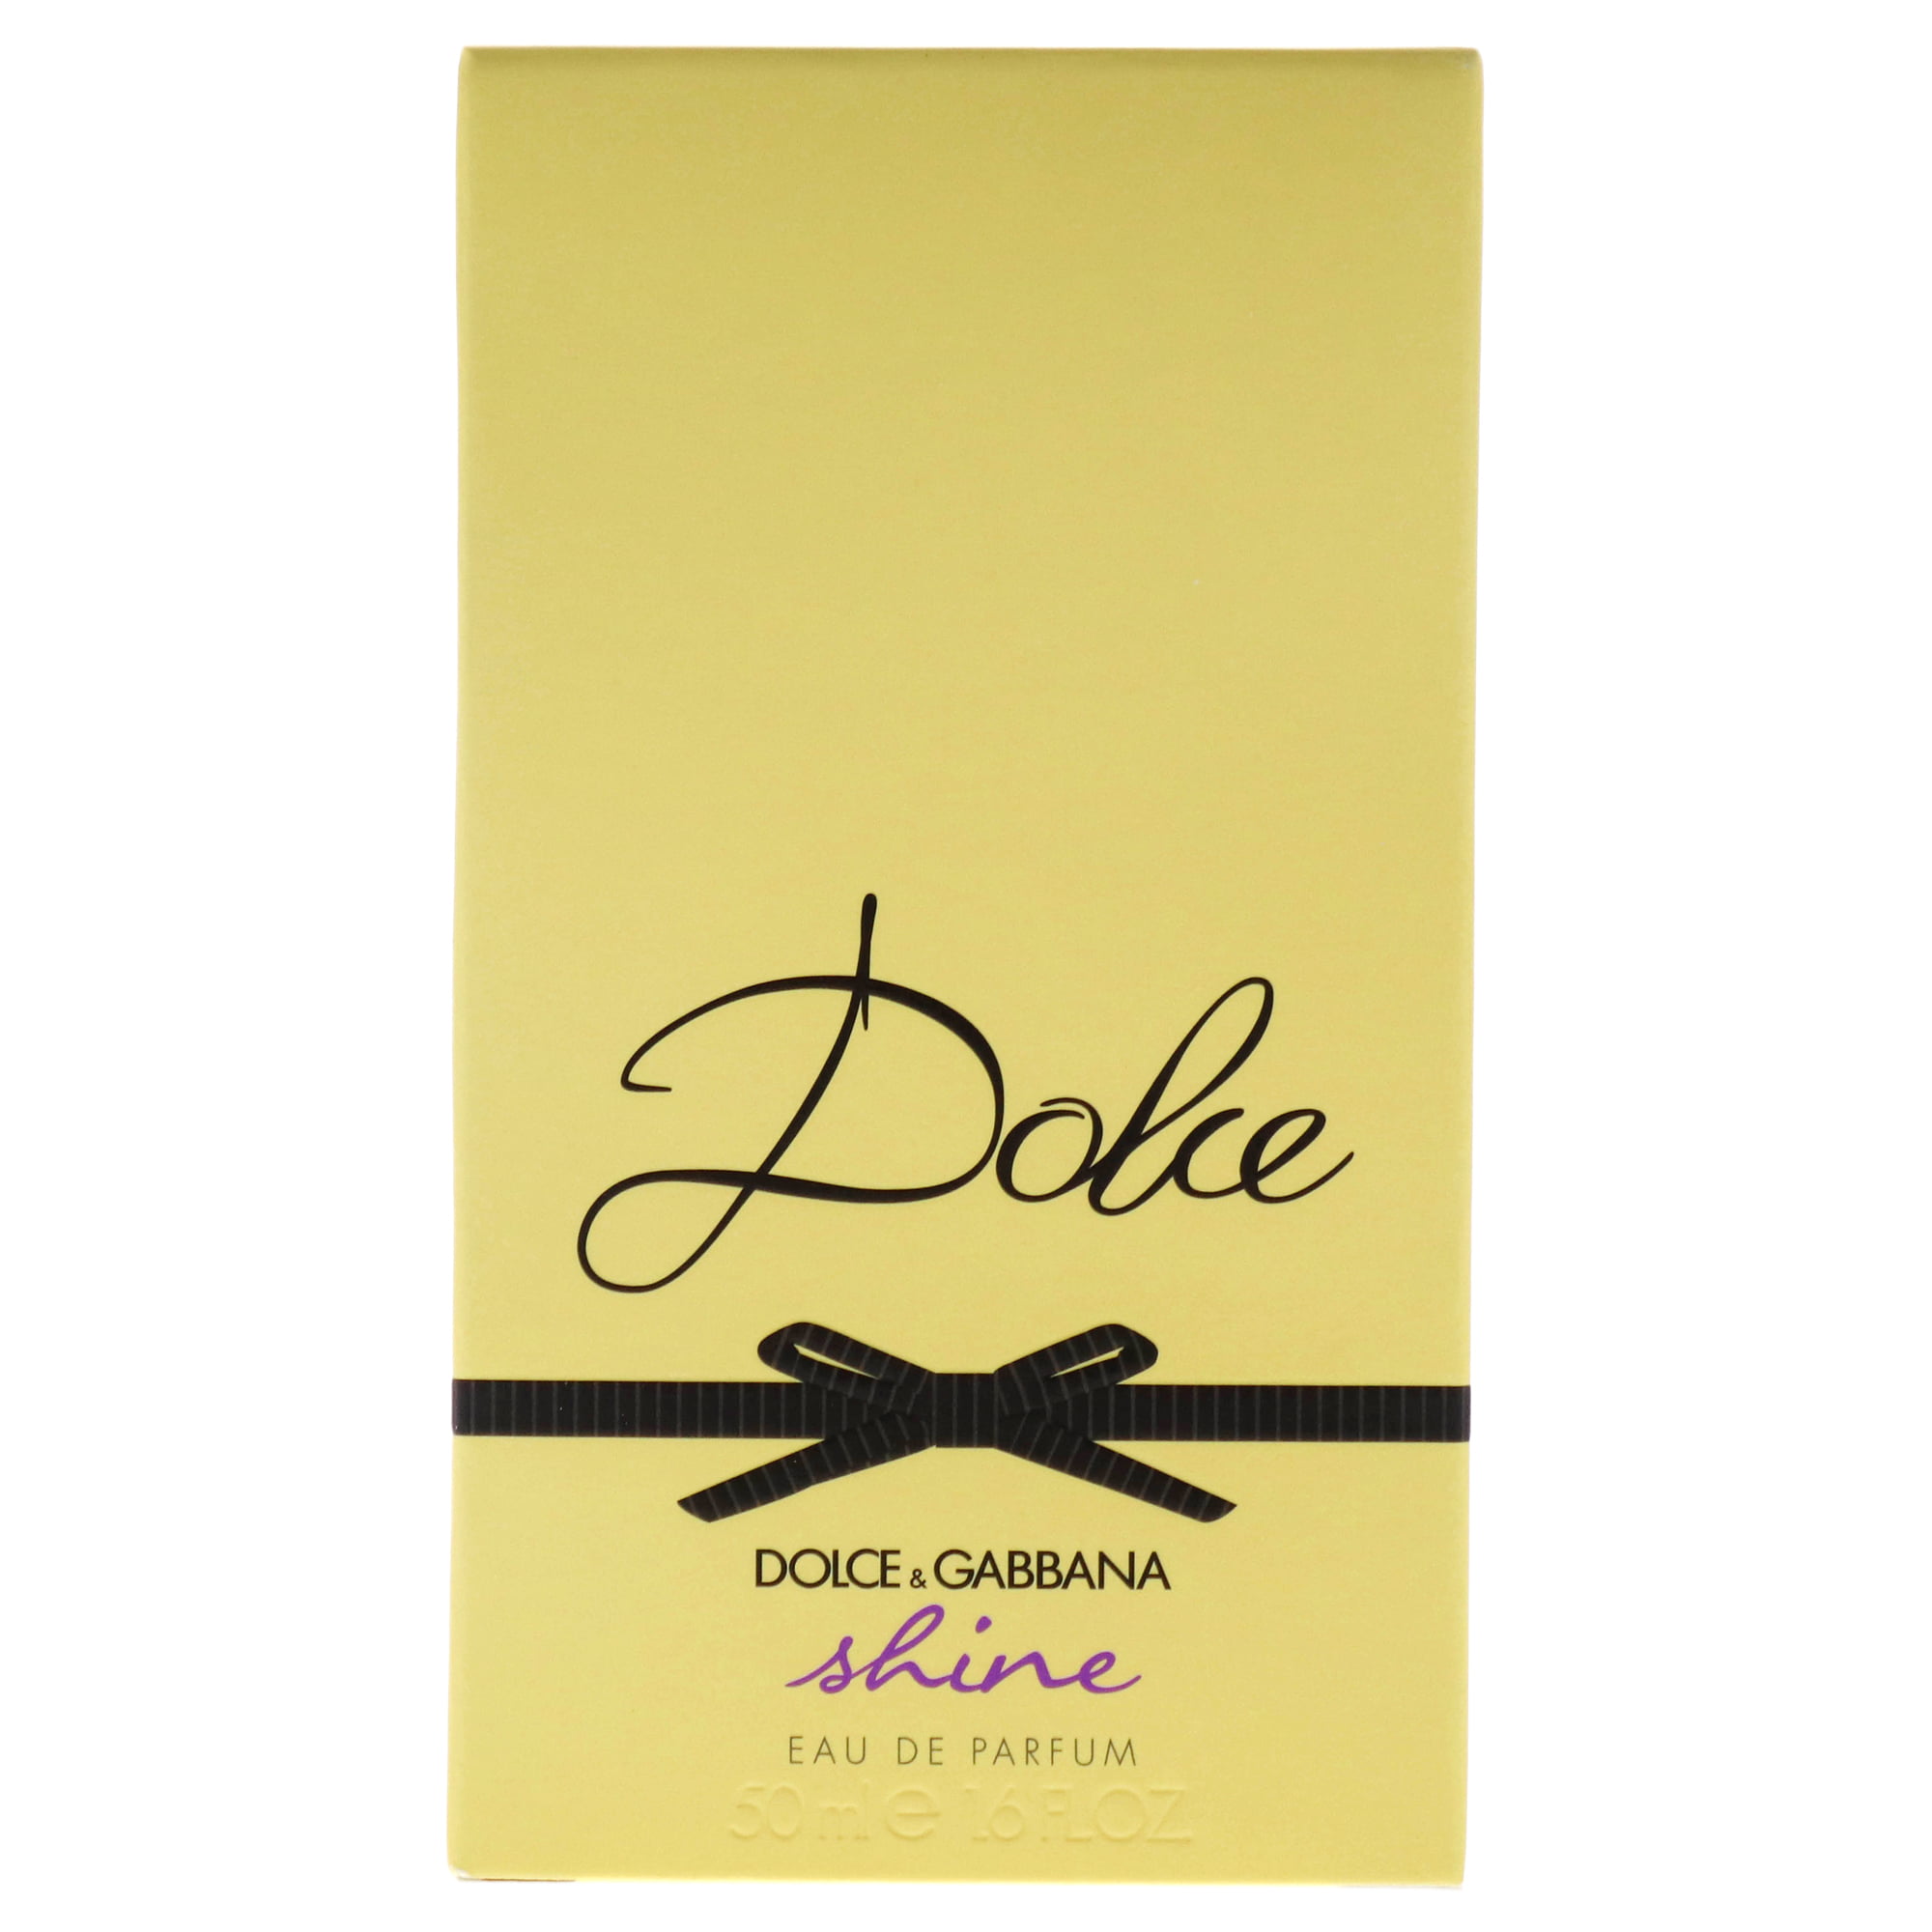 DOLCE SHINE by Dolce & Gabbana, EAU DE PARFUM SPRAY 1.7 OZ 